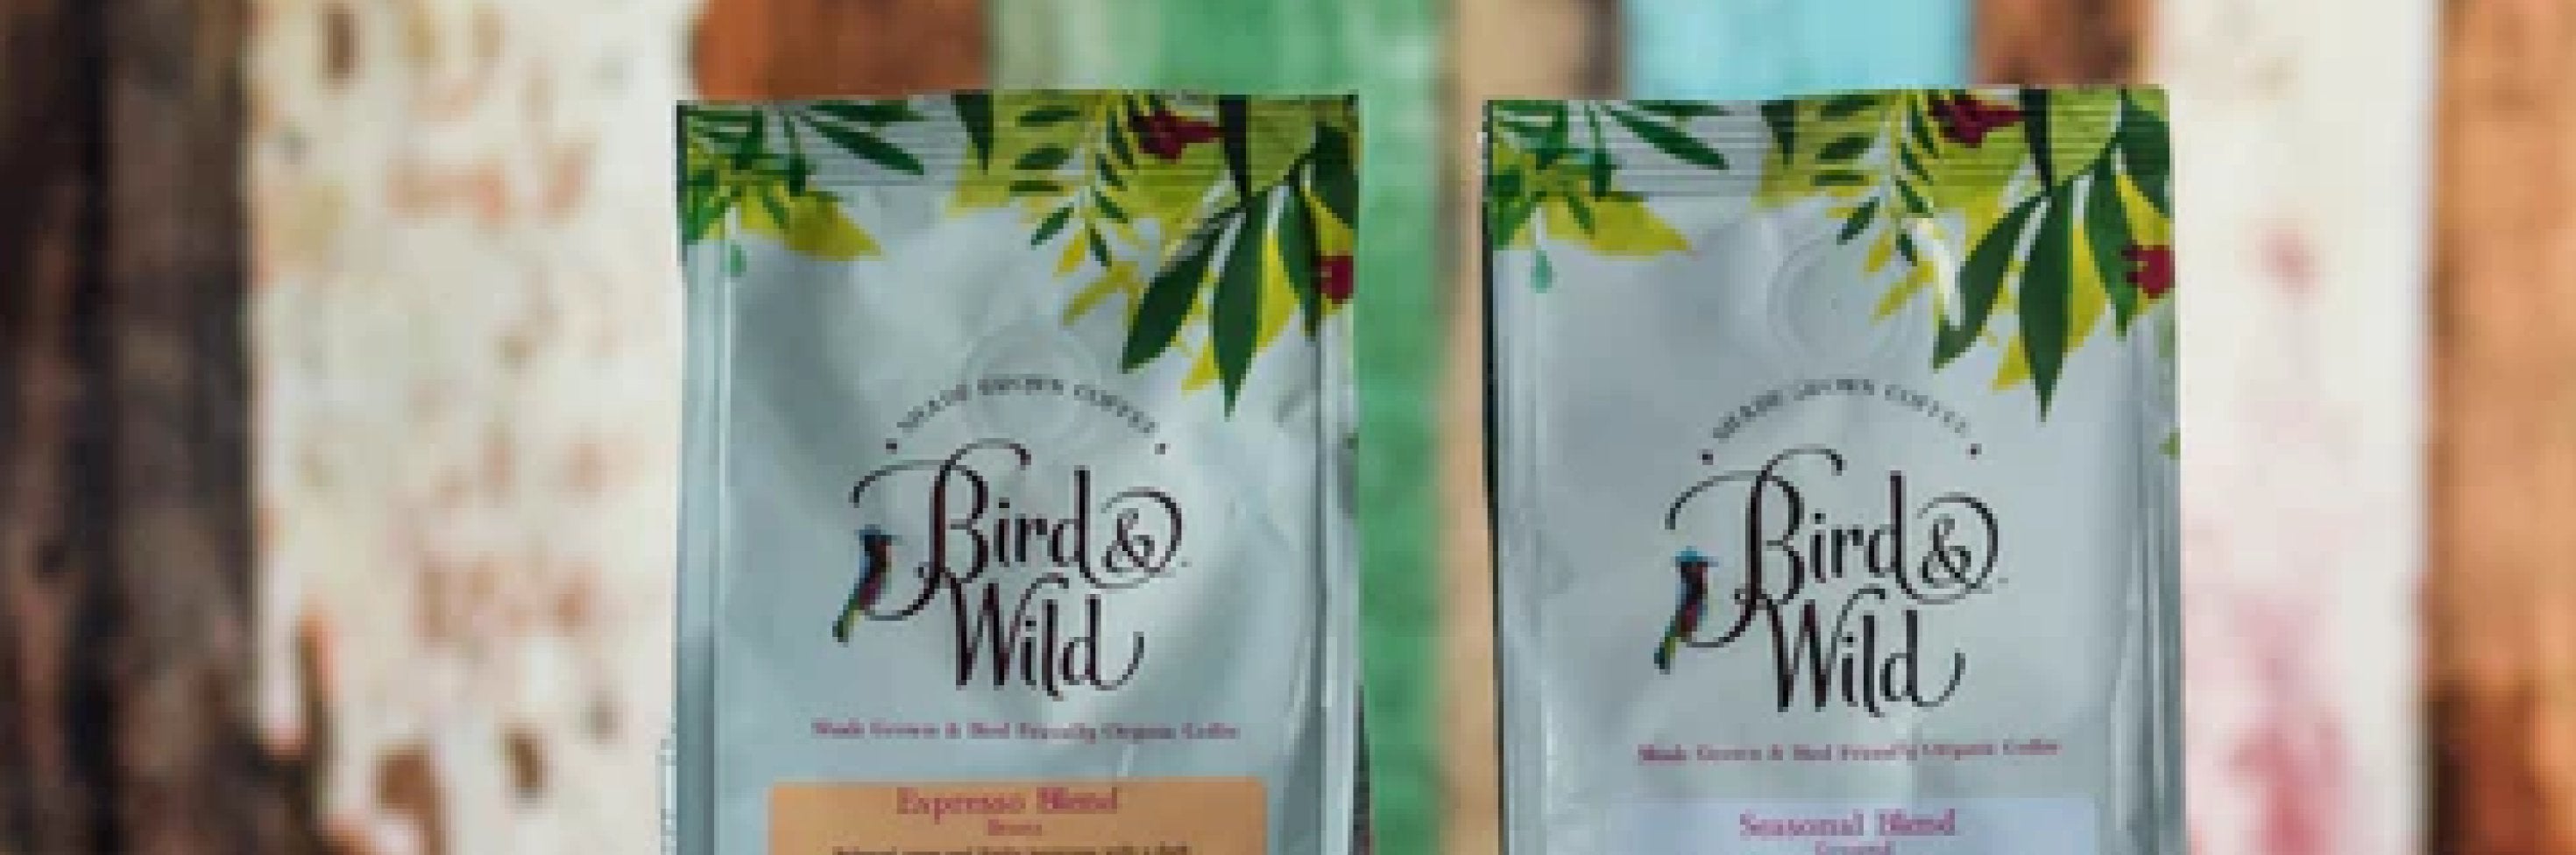 Our Bird & Wild Coffee photo shoot by Hedi Hearts - Bird & Wild Coffee